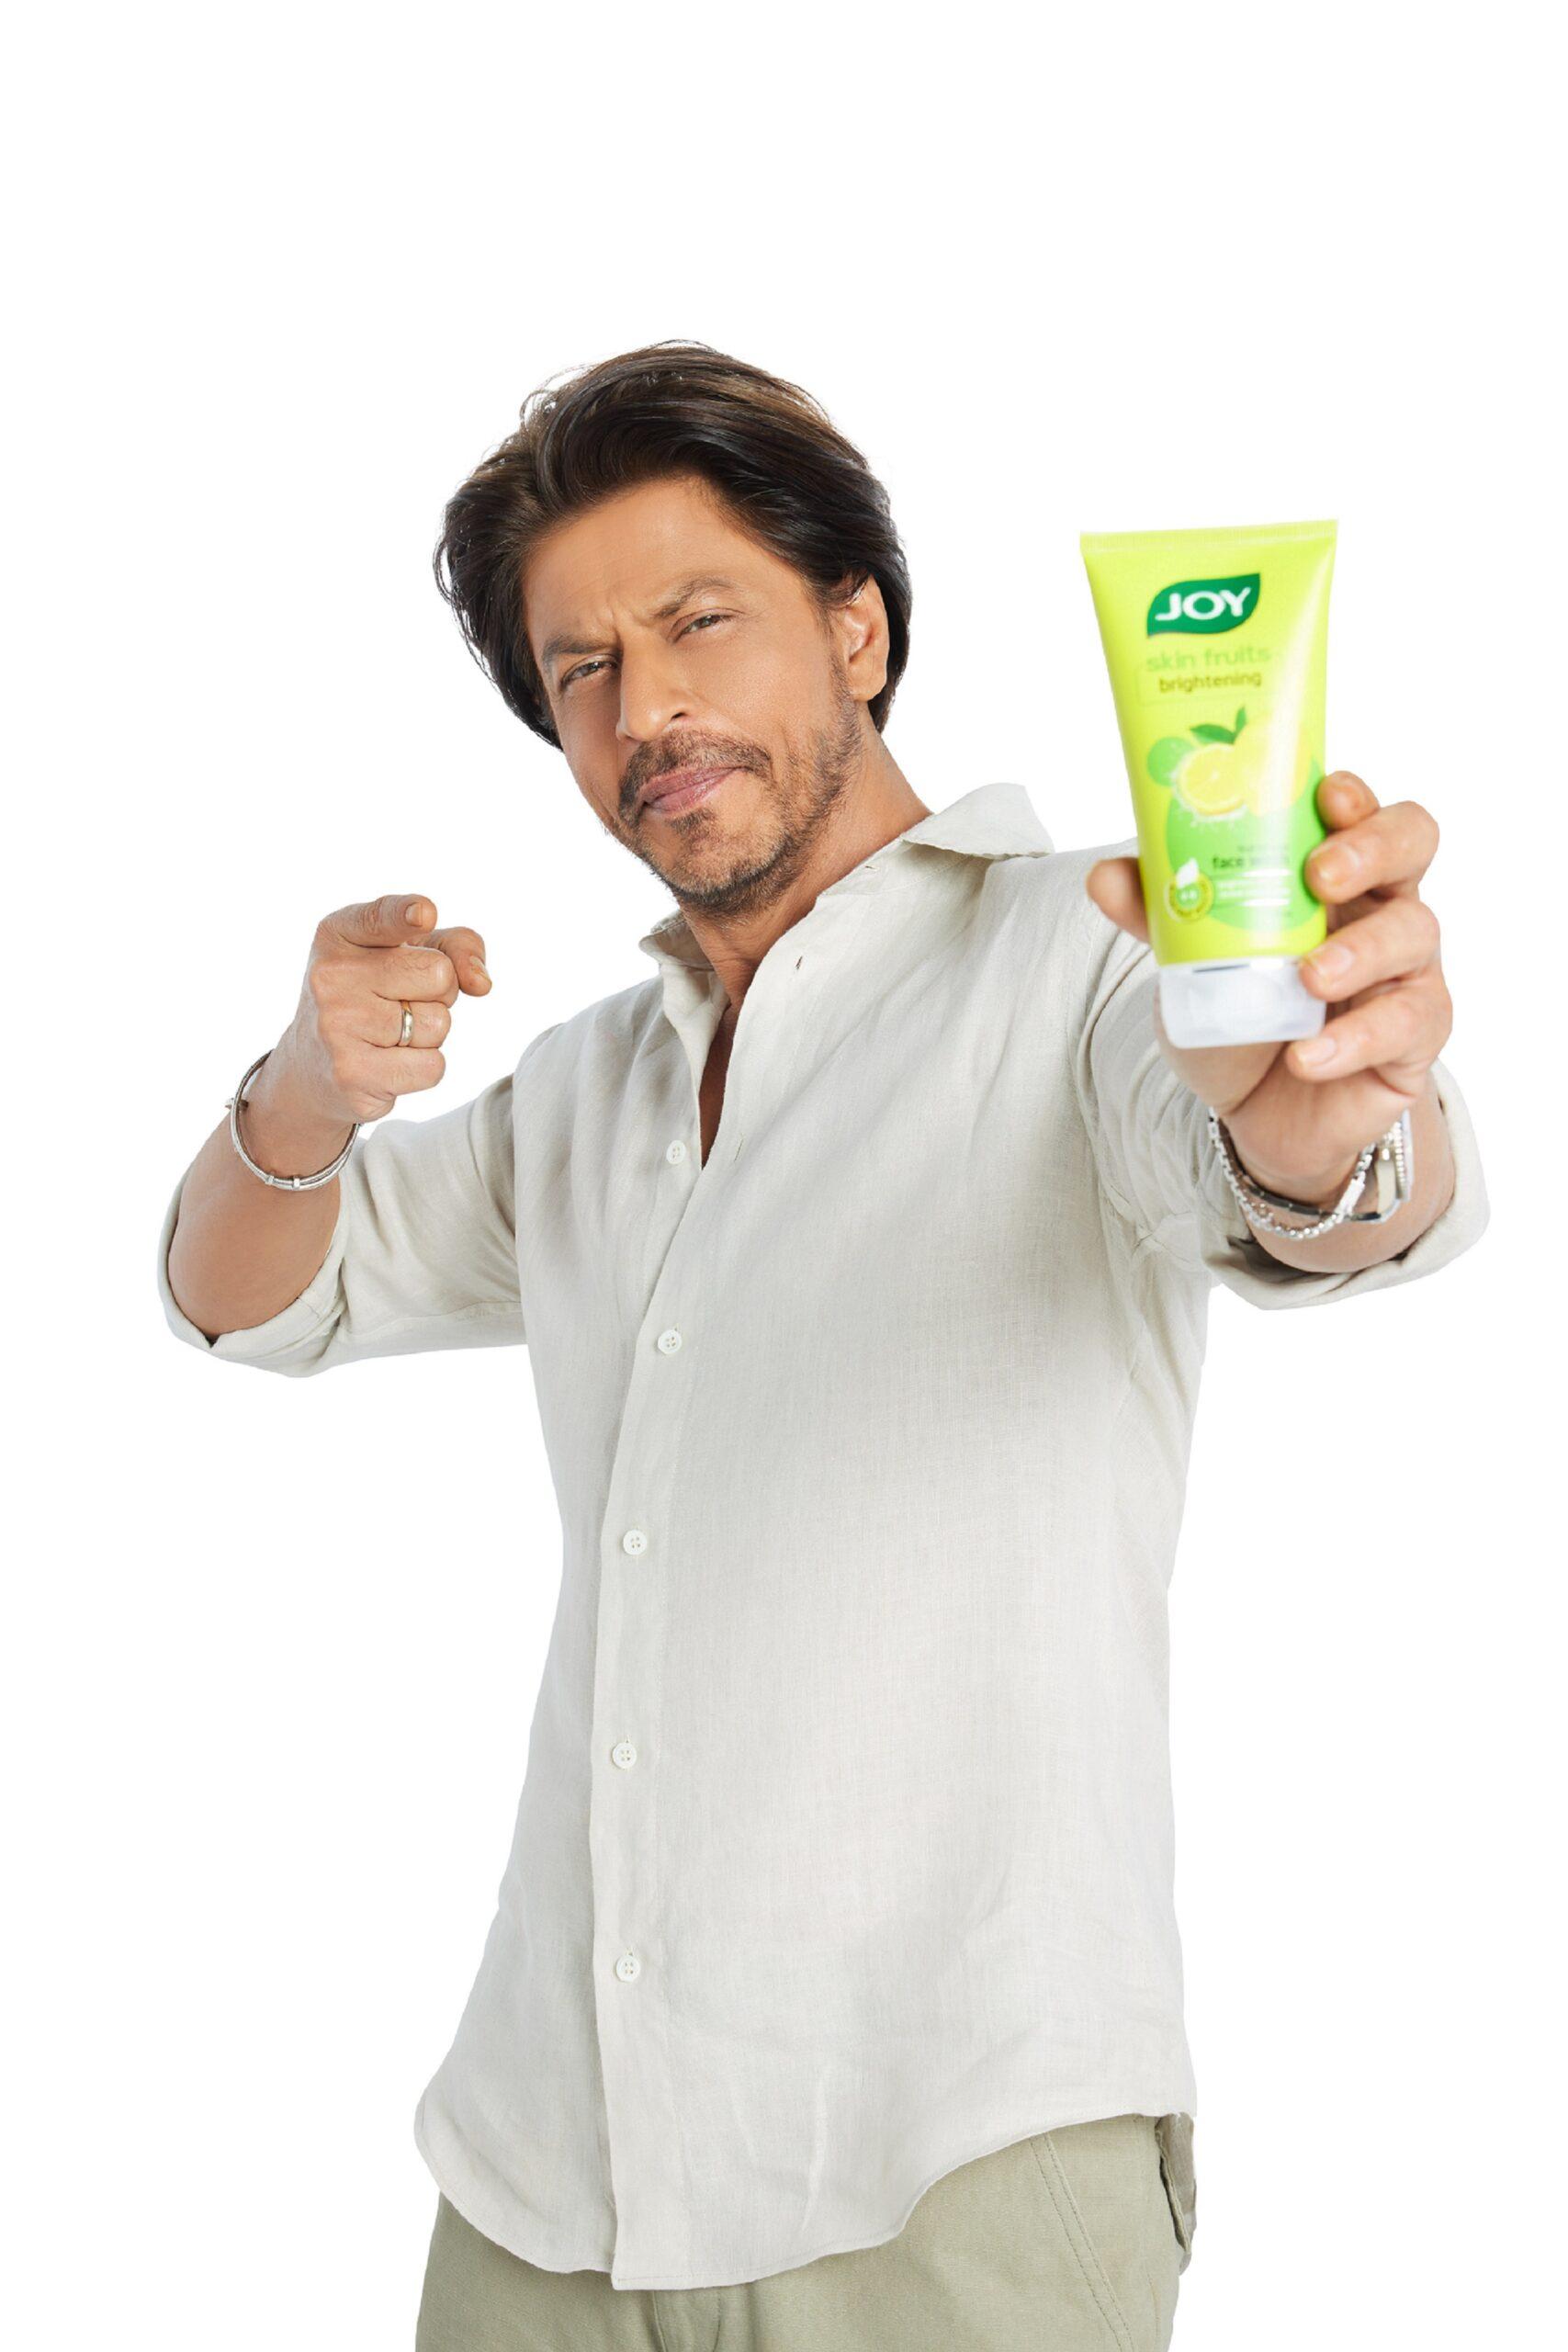 Joy Personal Care Brand Ambassador Shah Rukh Khan endorsing JOY Lemon Face Wash